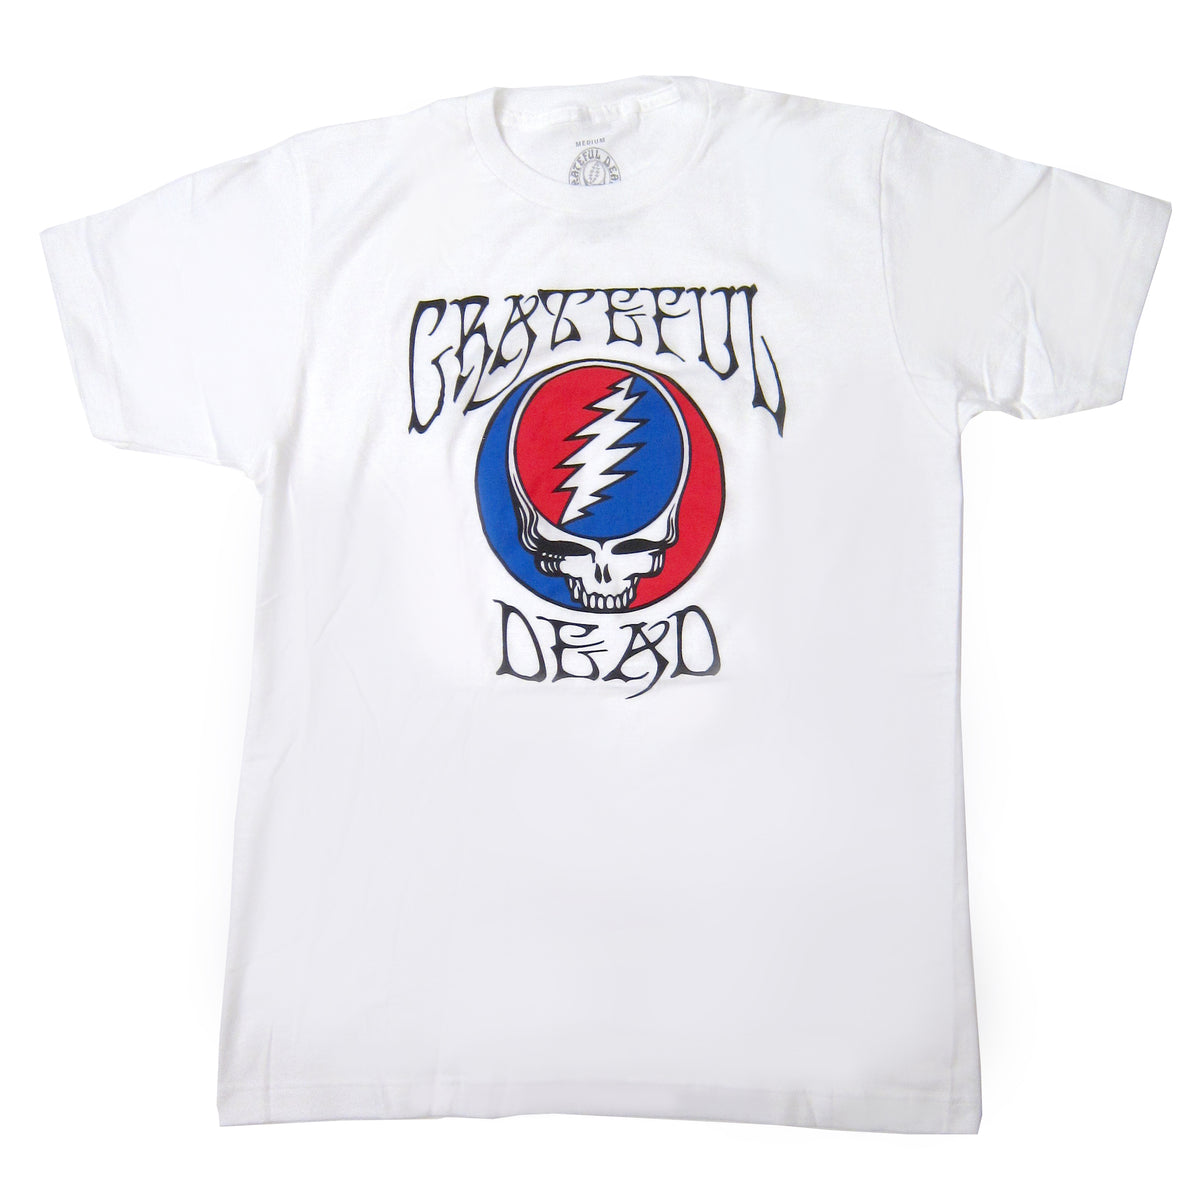 Grateful Dead - Steal Your Orbit T-Shirt Black